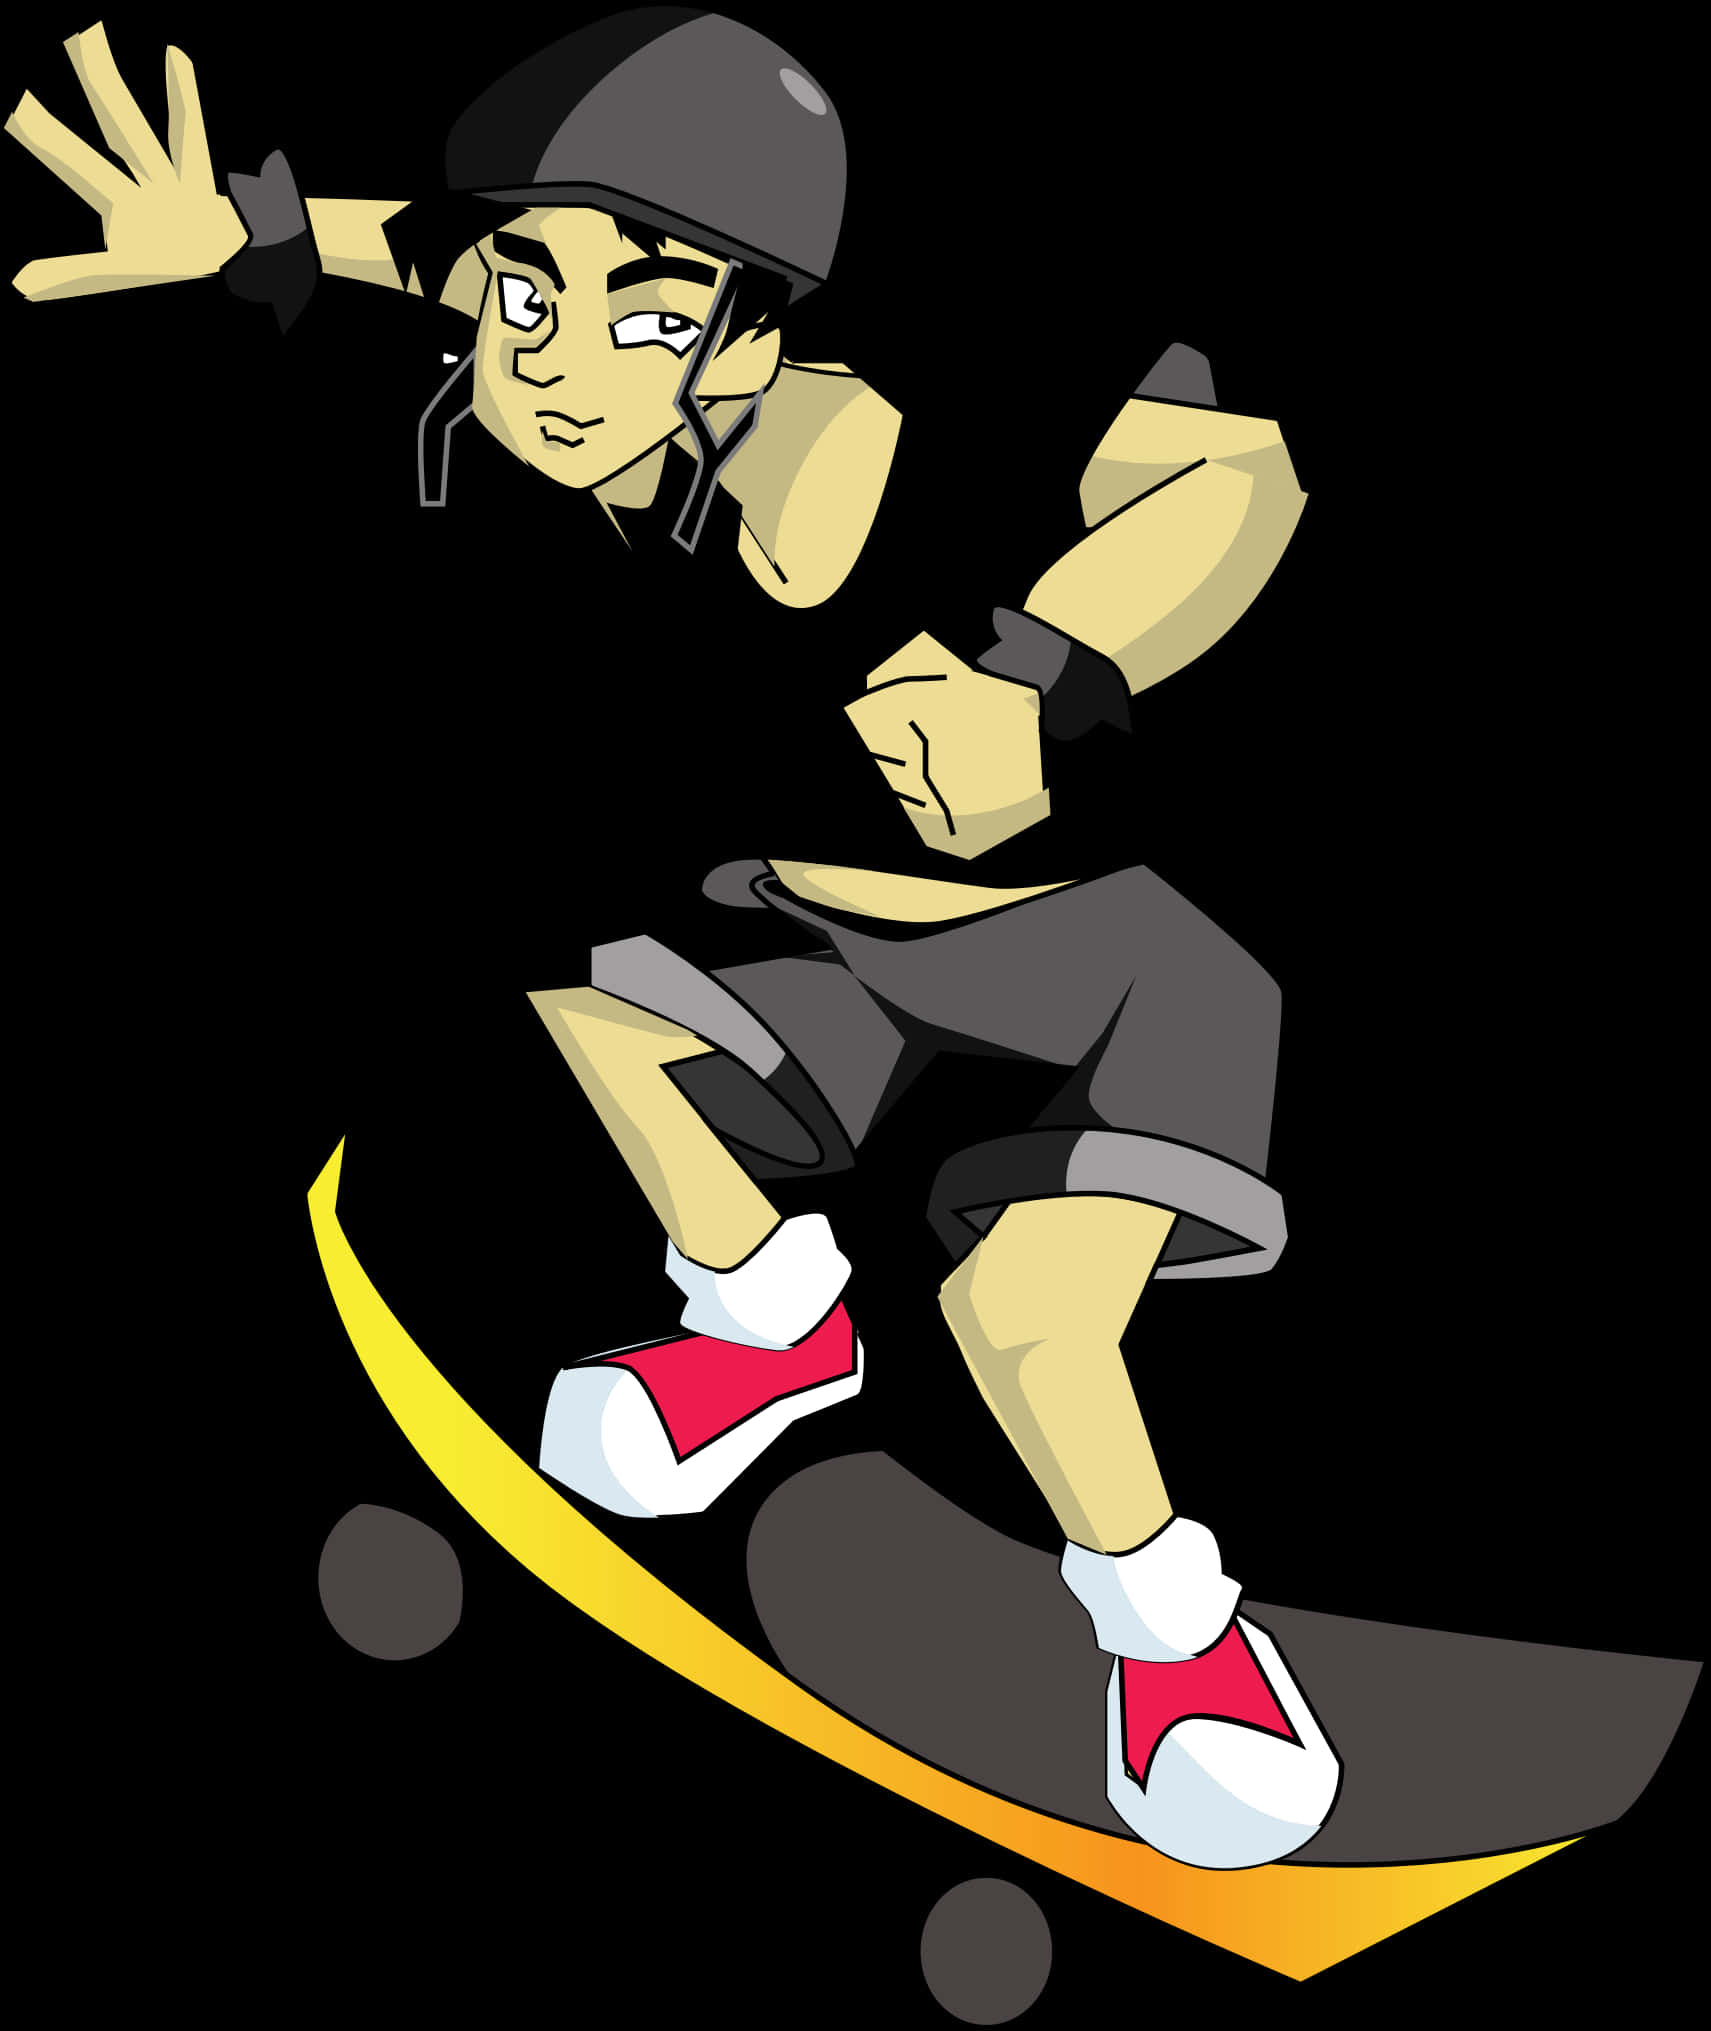 Animated Skateboarder Trick Stance PNG image